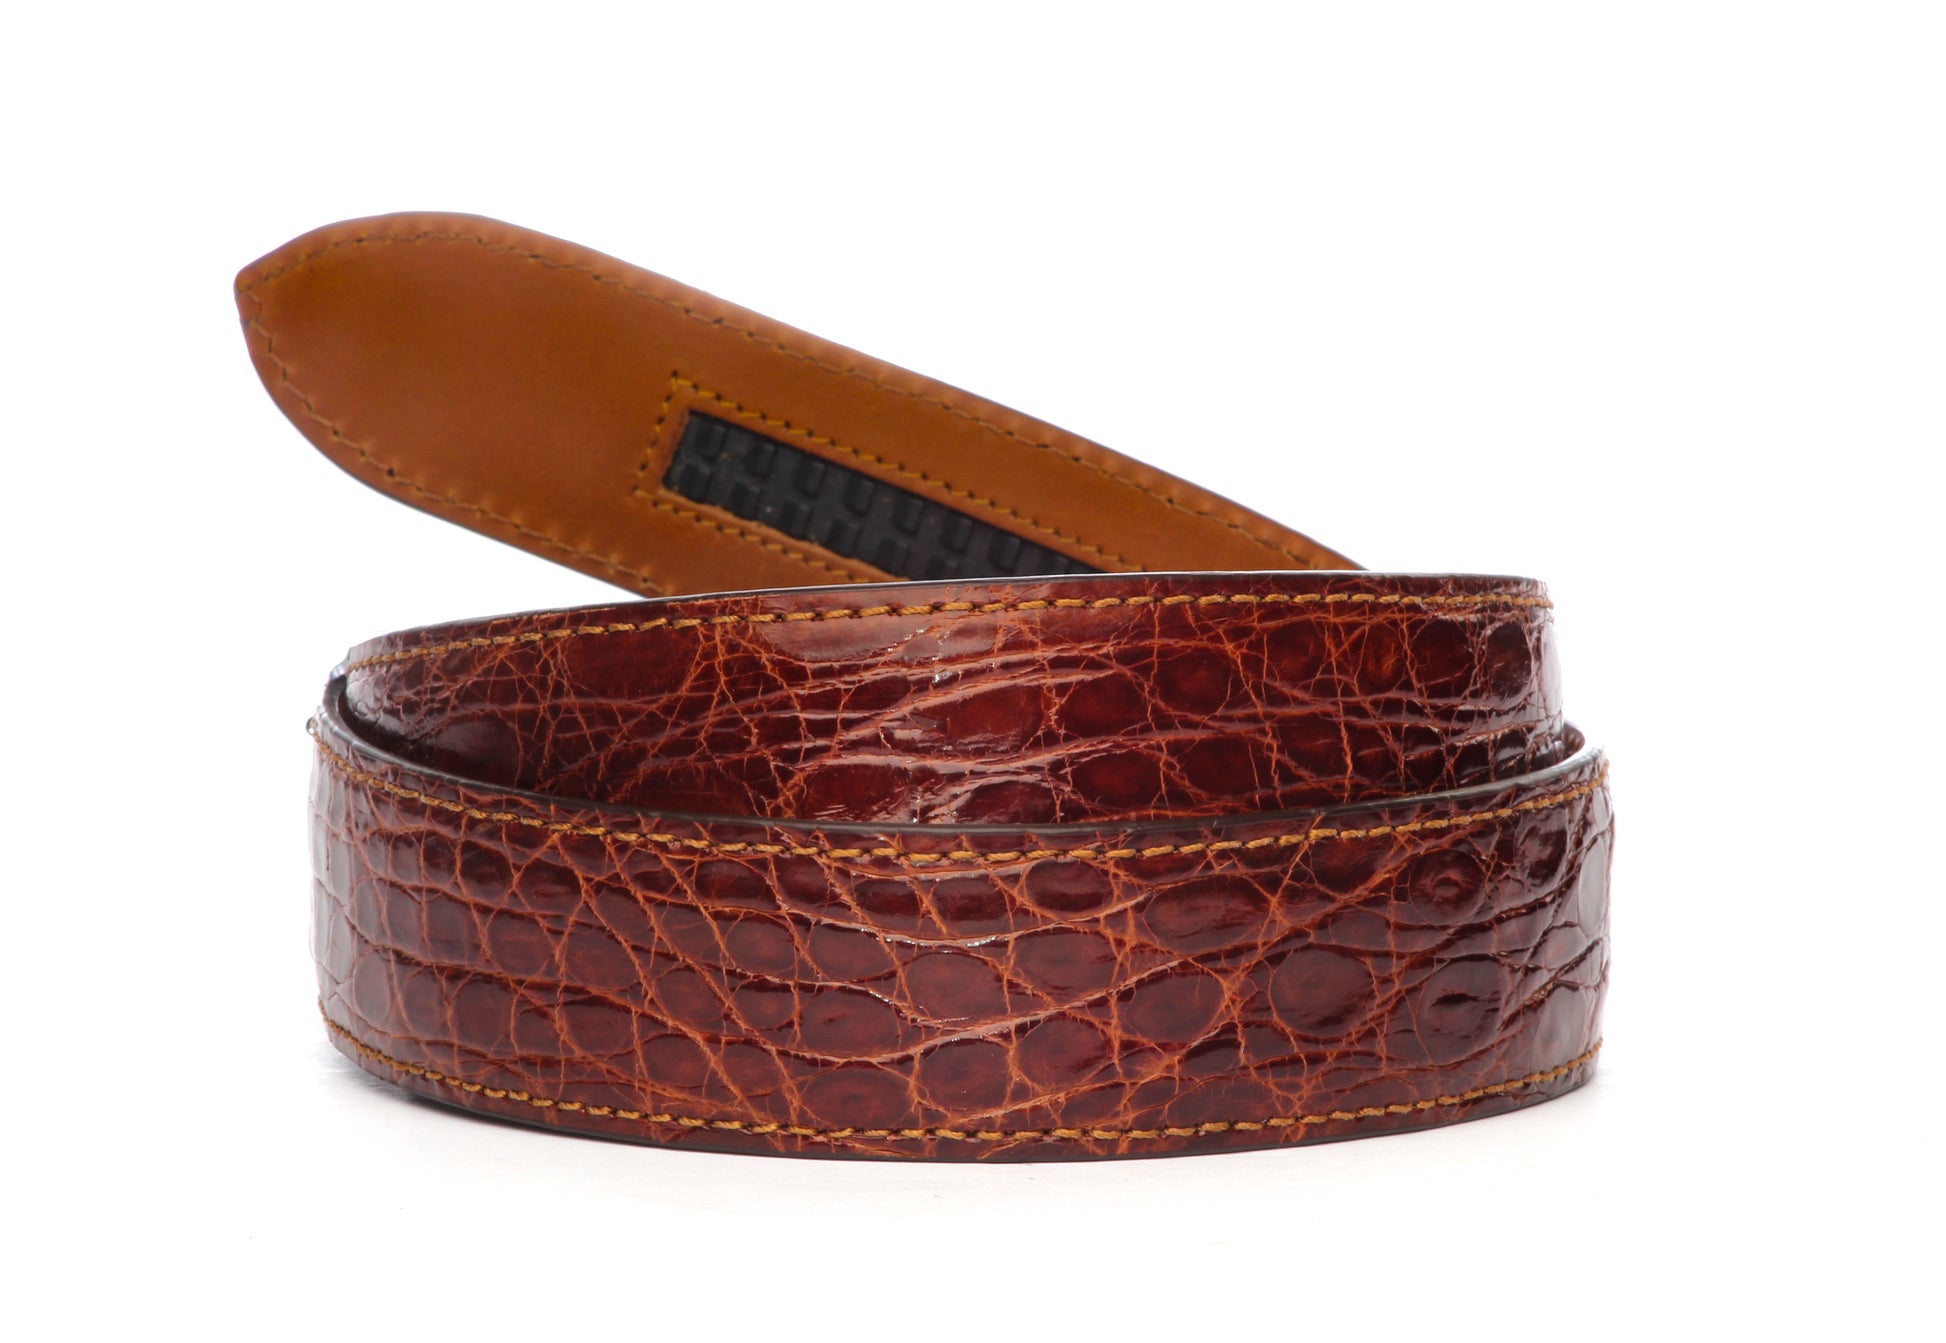 Men's crocodile belt strap in cognac, 1.5 inches wide, formal look, full roll